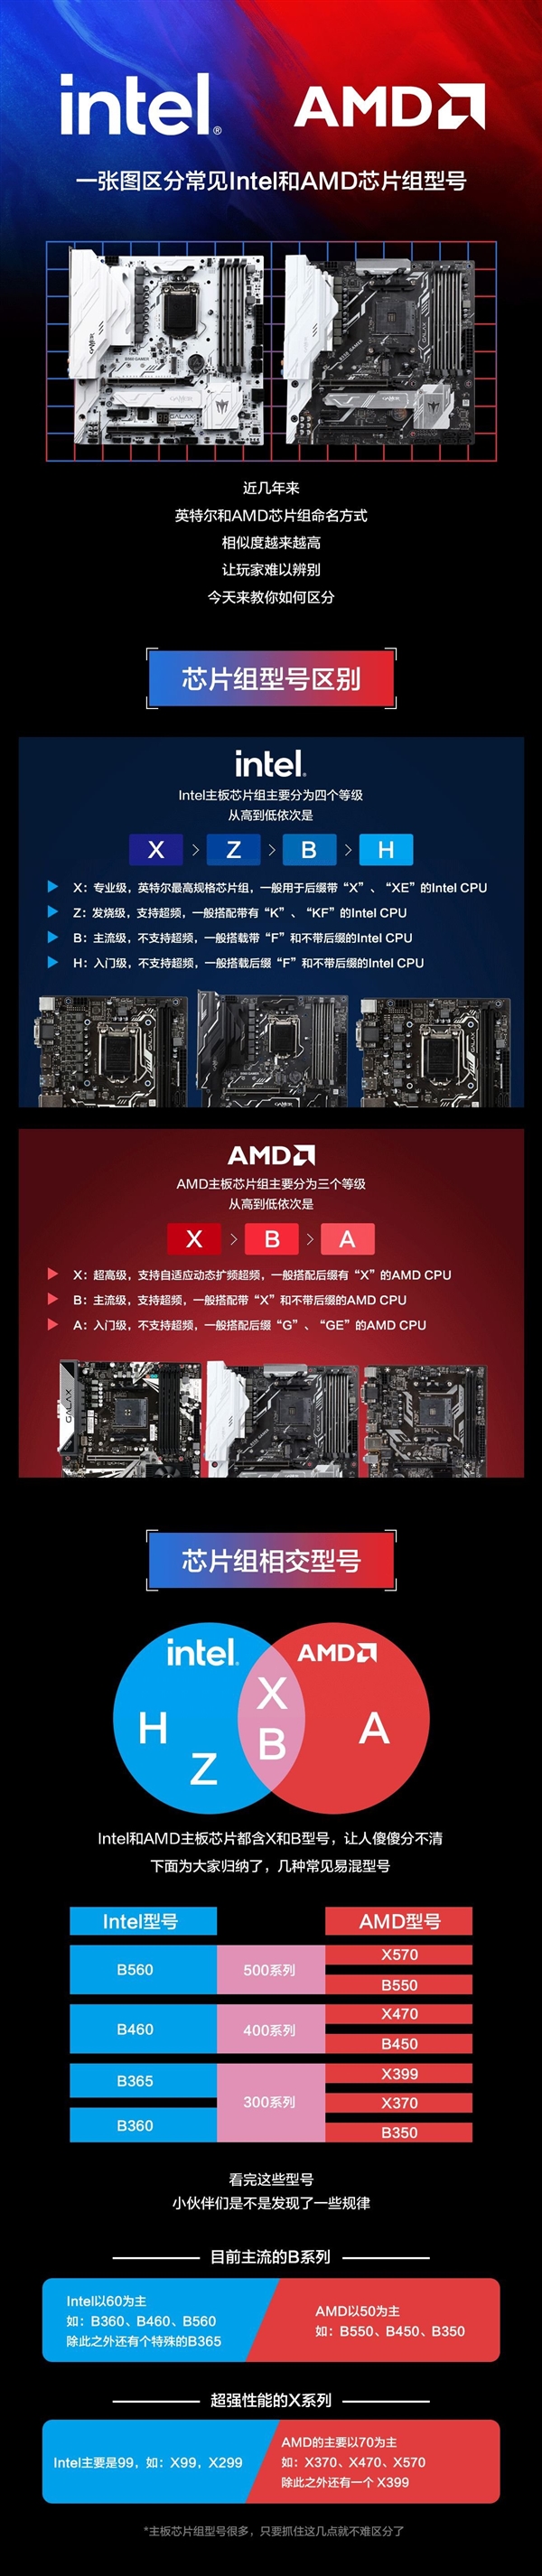 Intel、AMD主板乱如麻：一图分清